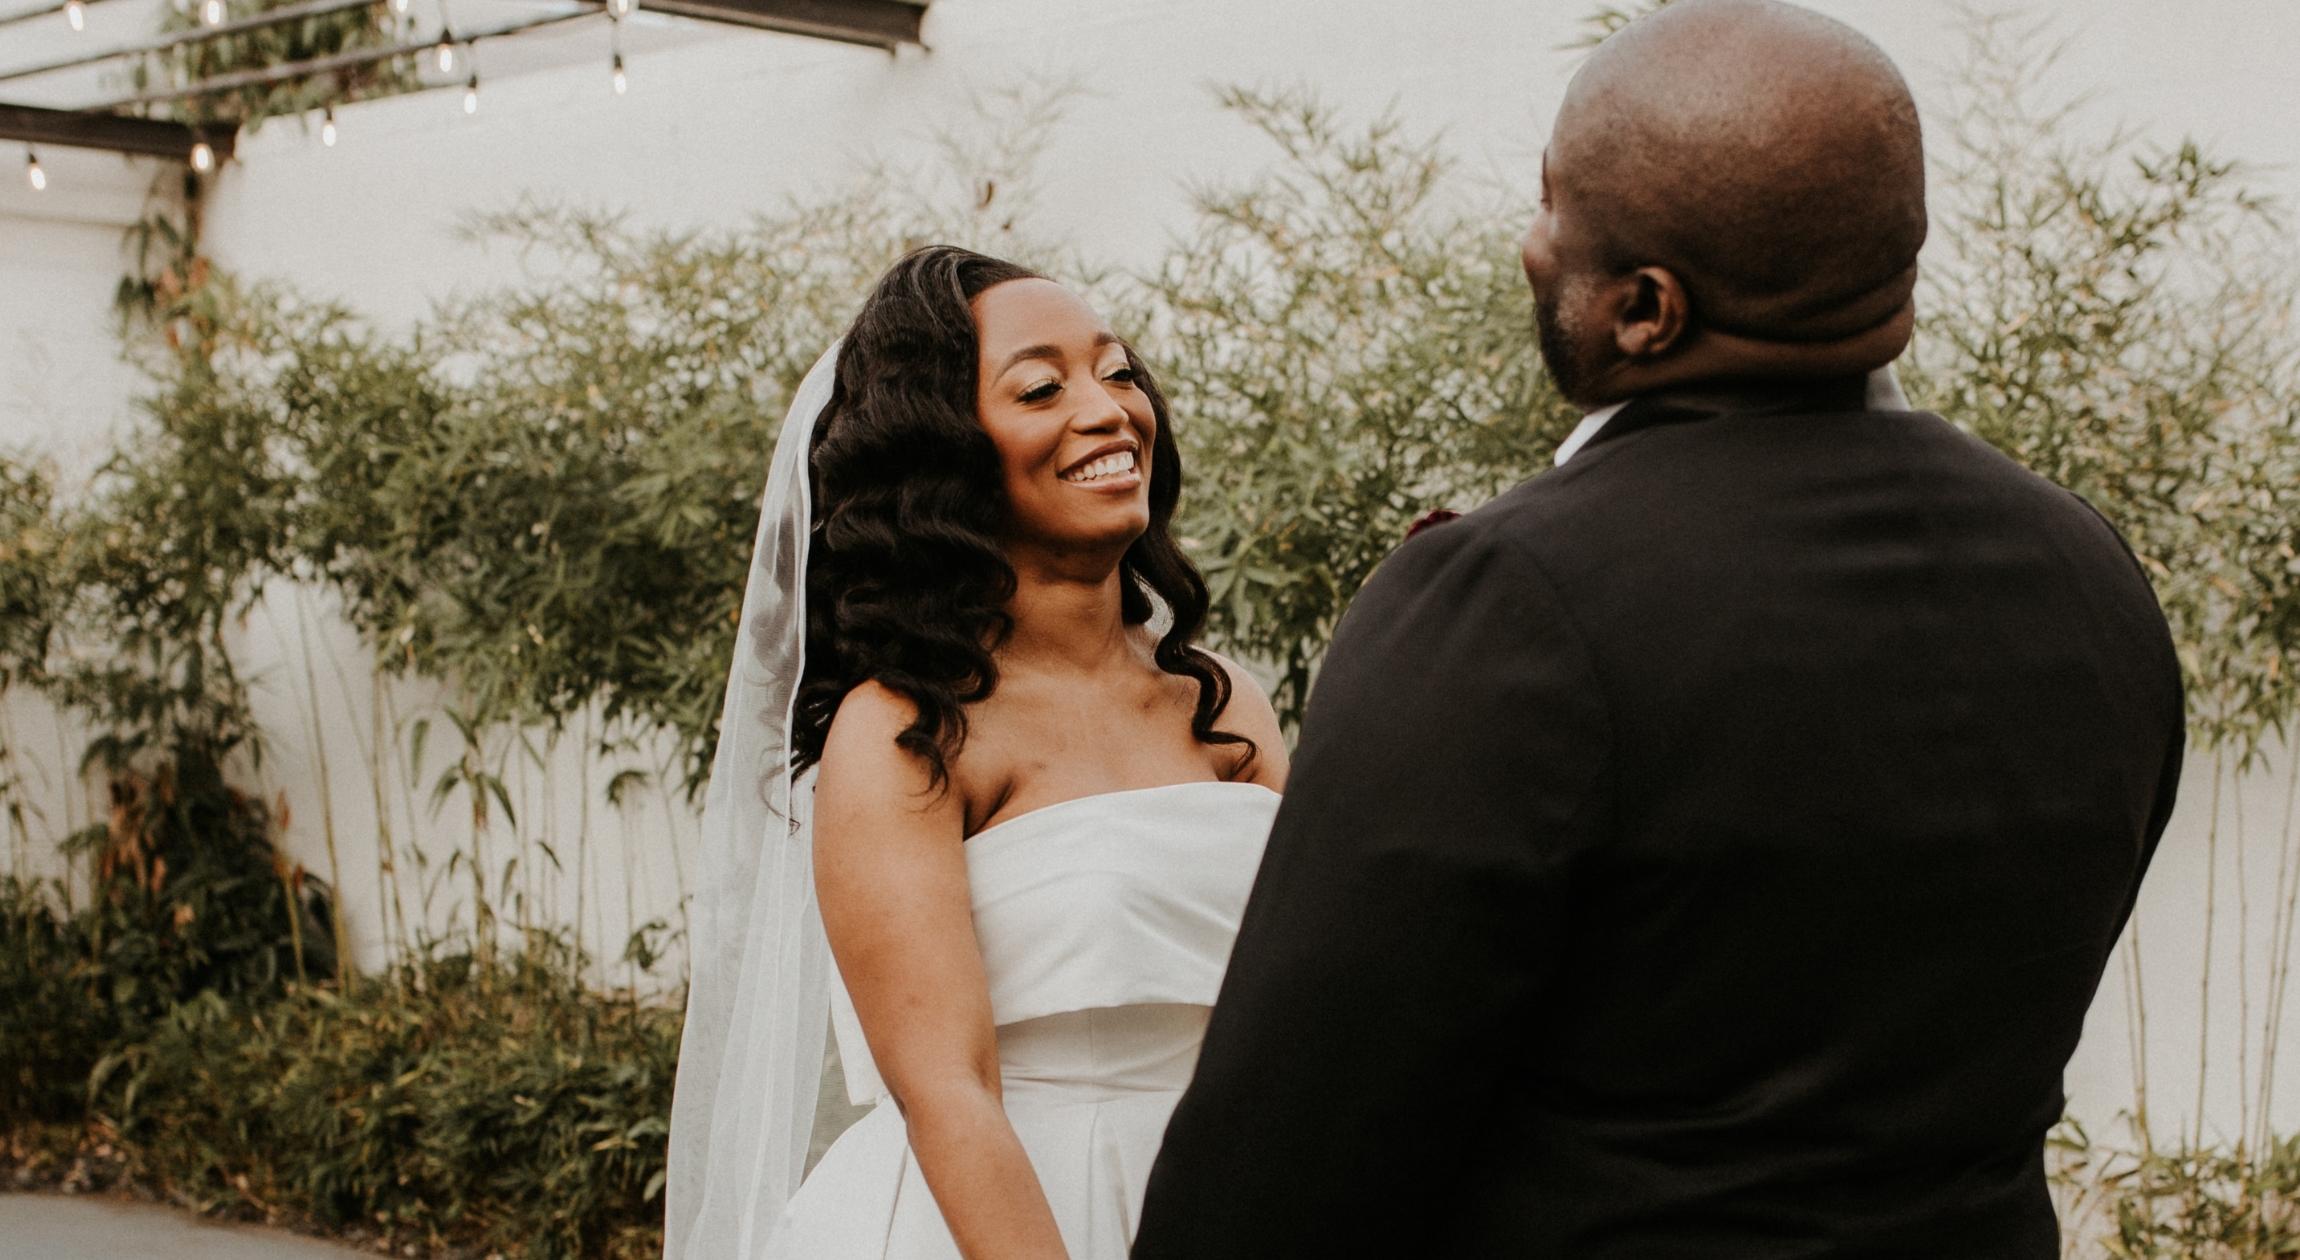 A Black bride smiling facing a Black groom